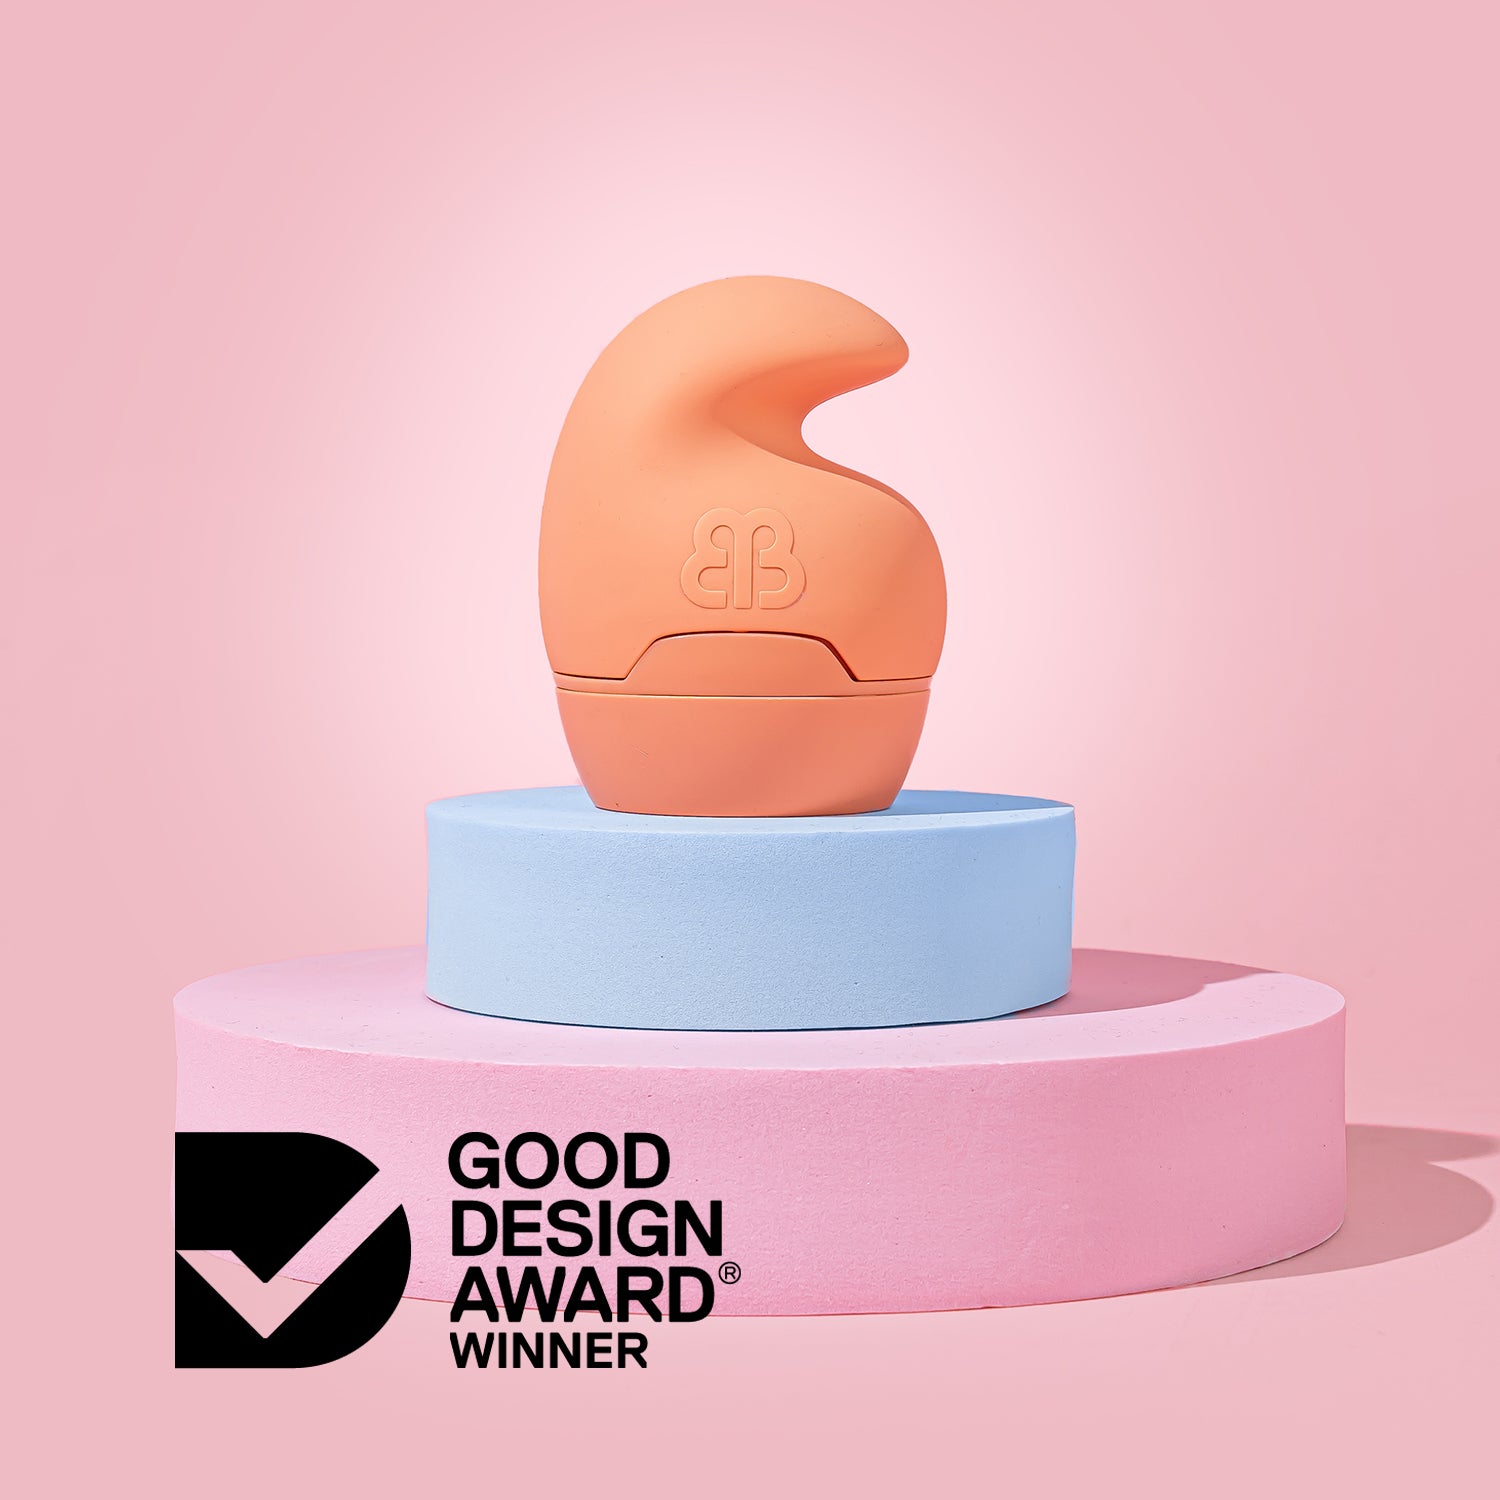 Australia’s International Good Design Awards for Design Excellence.